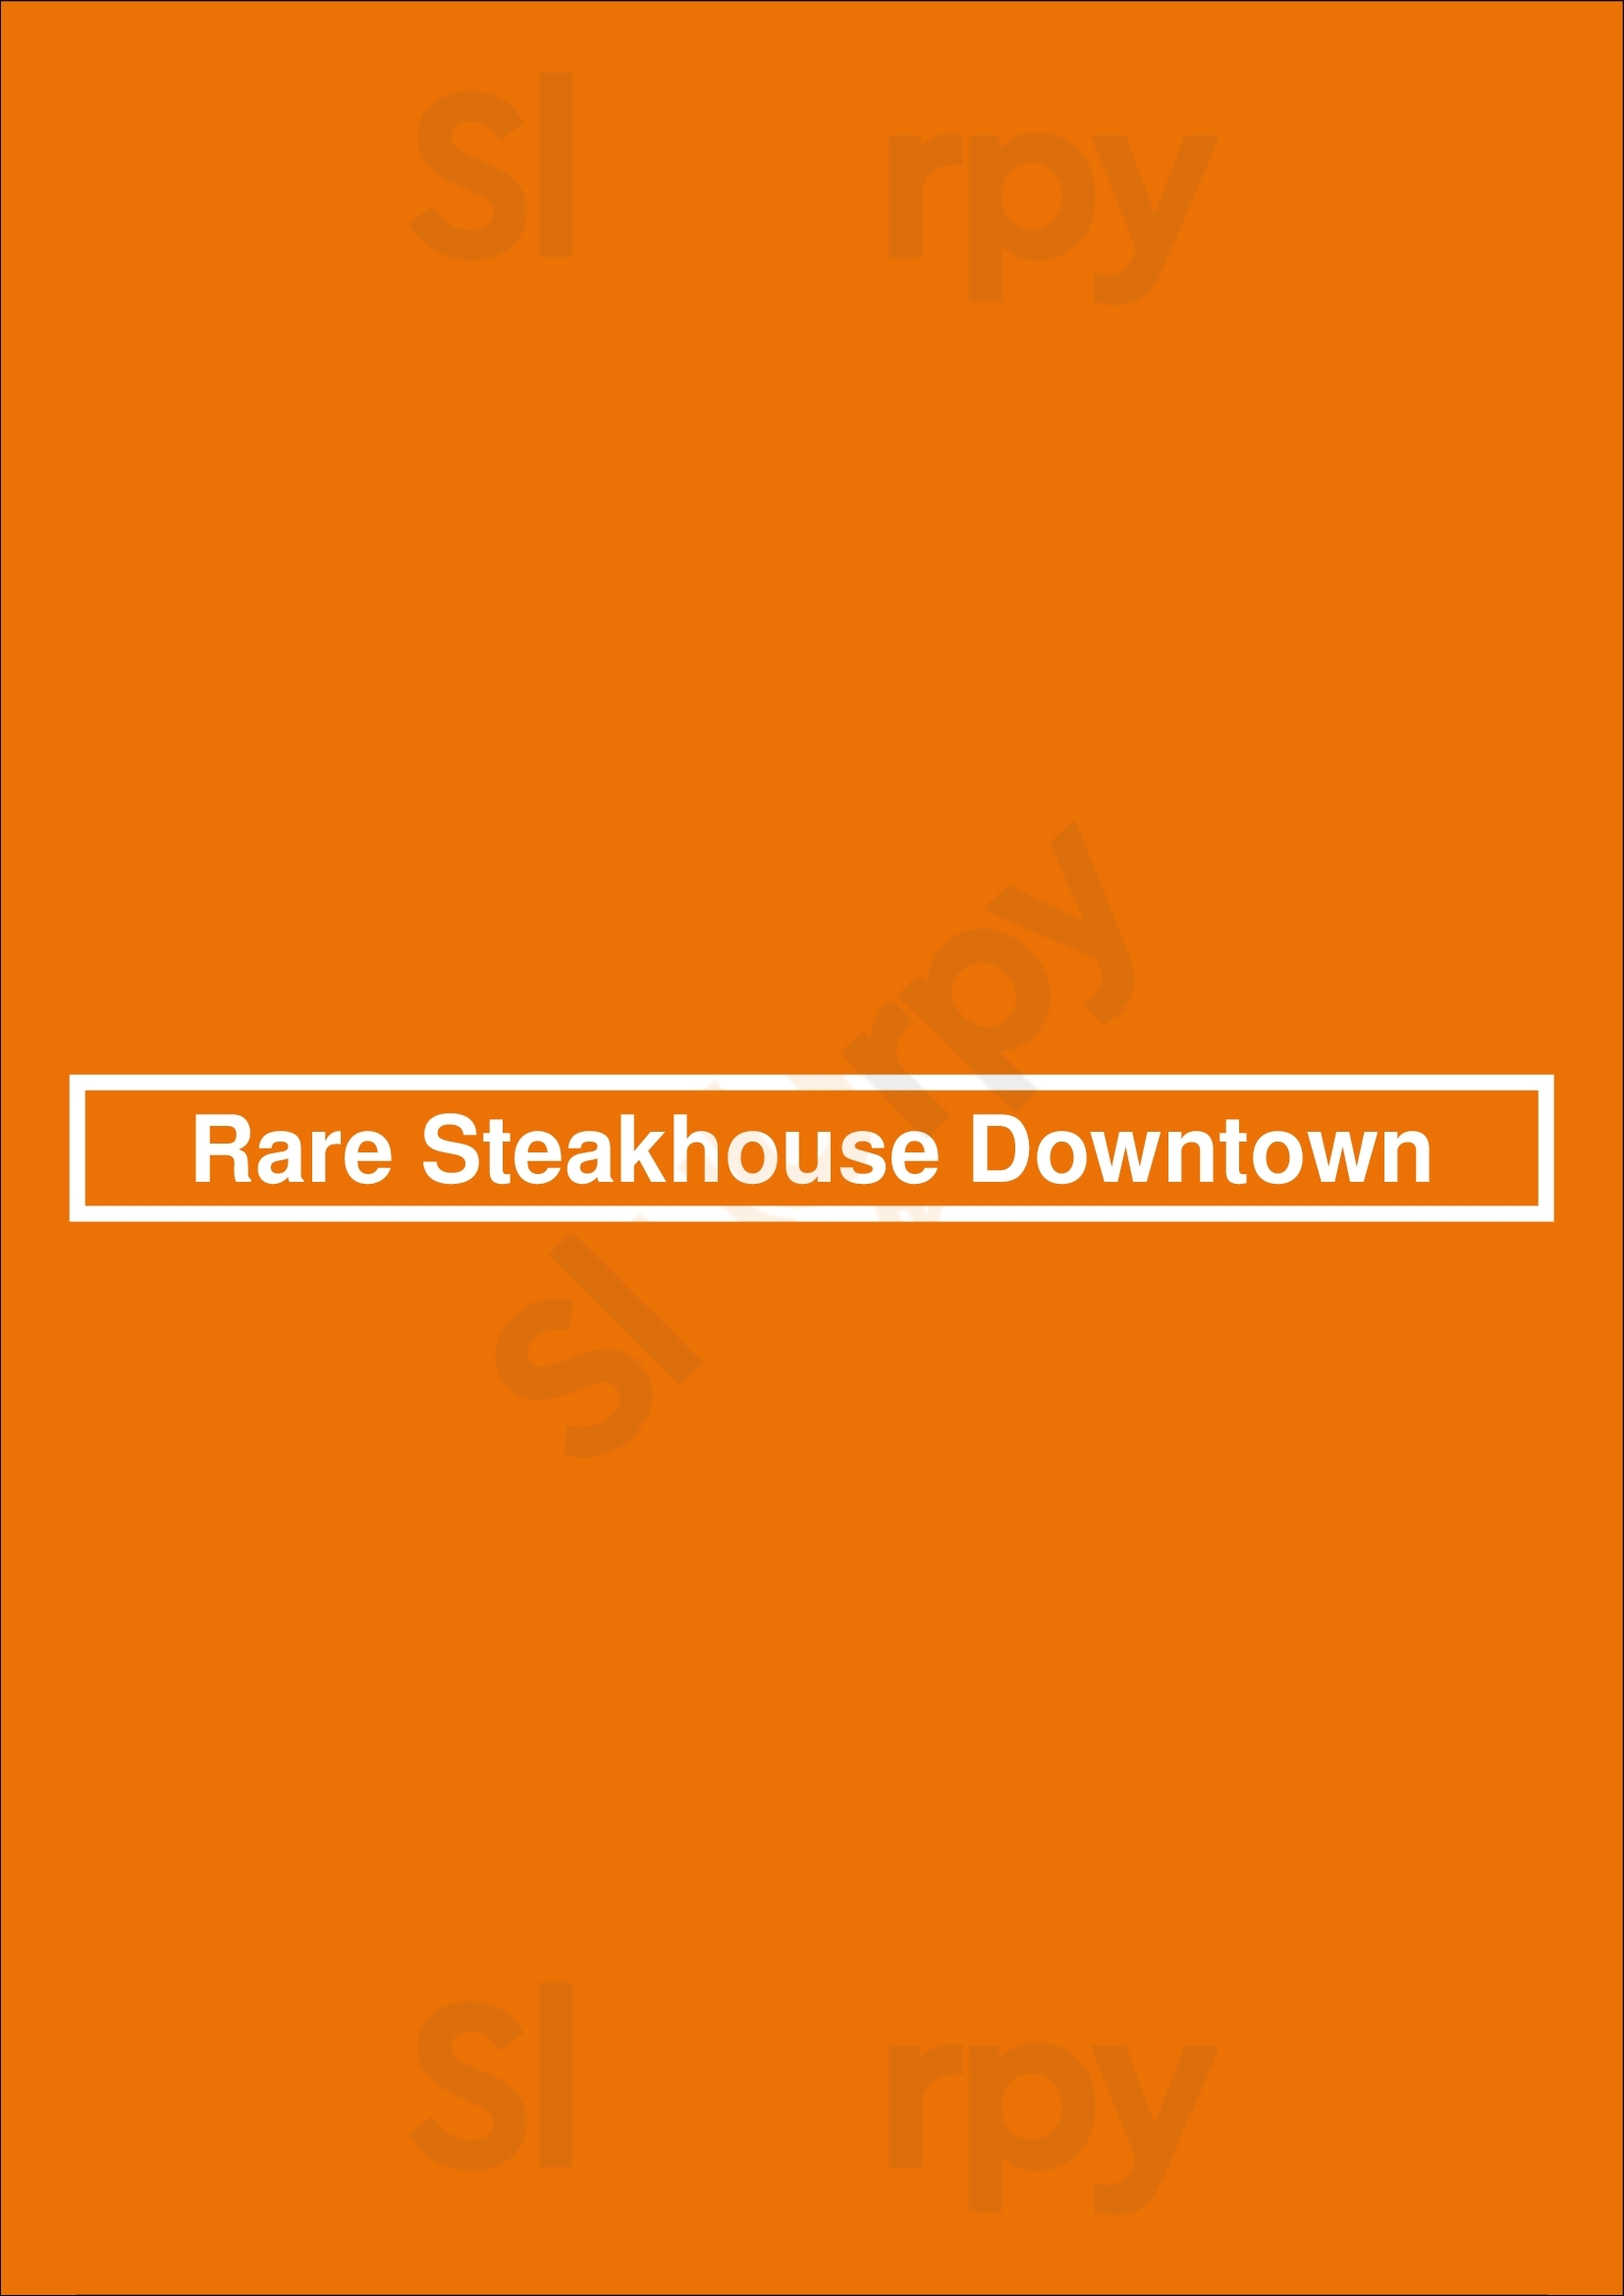 Rare Steakhouse Downtown Melbourne Menu - 1